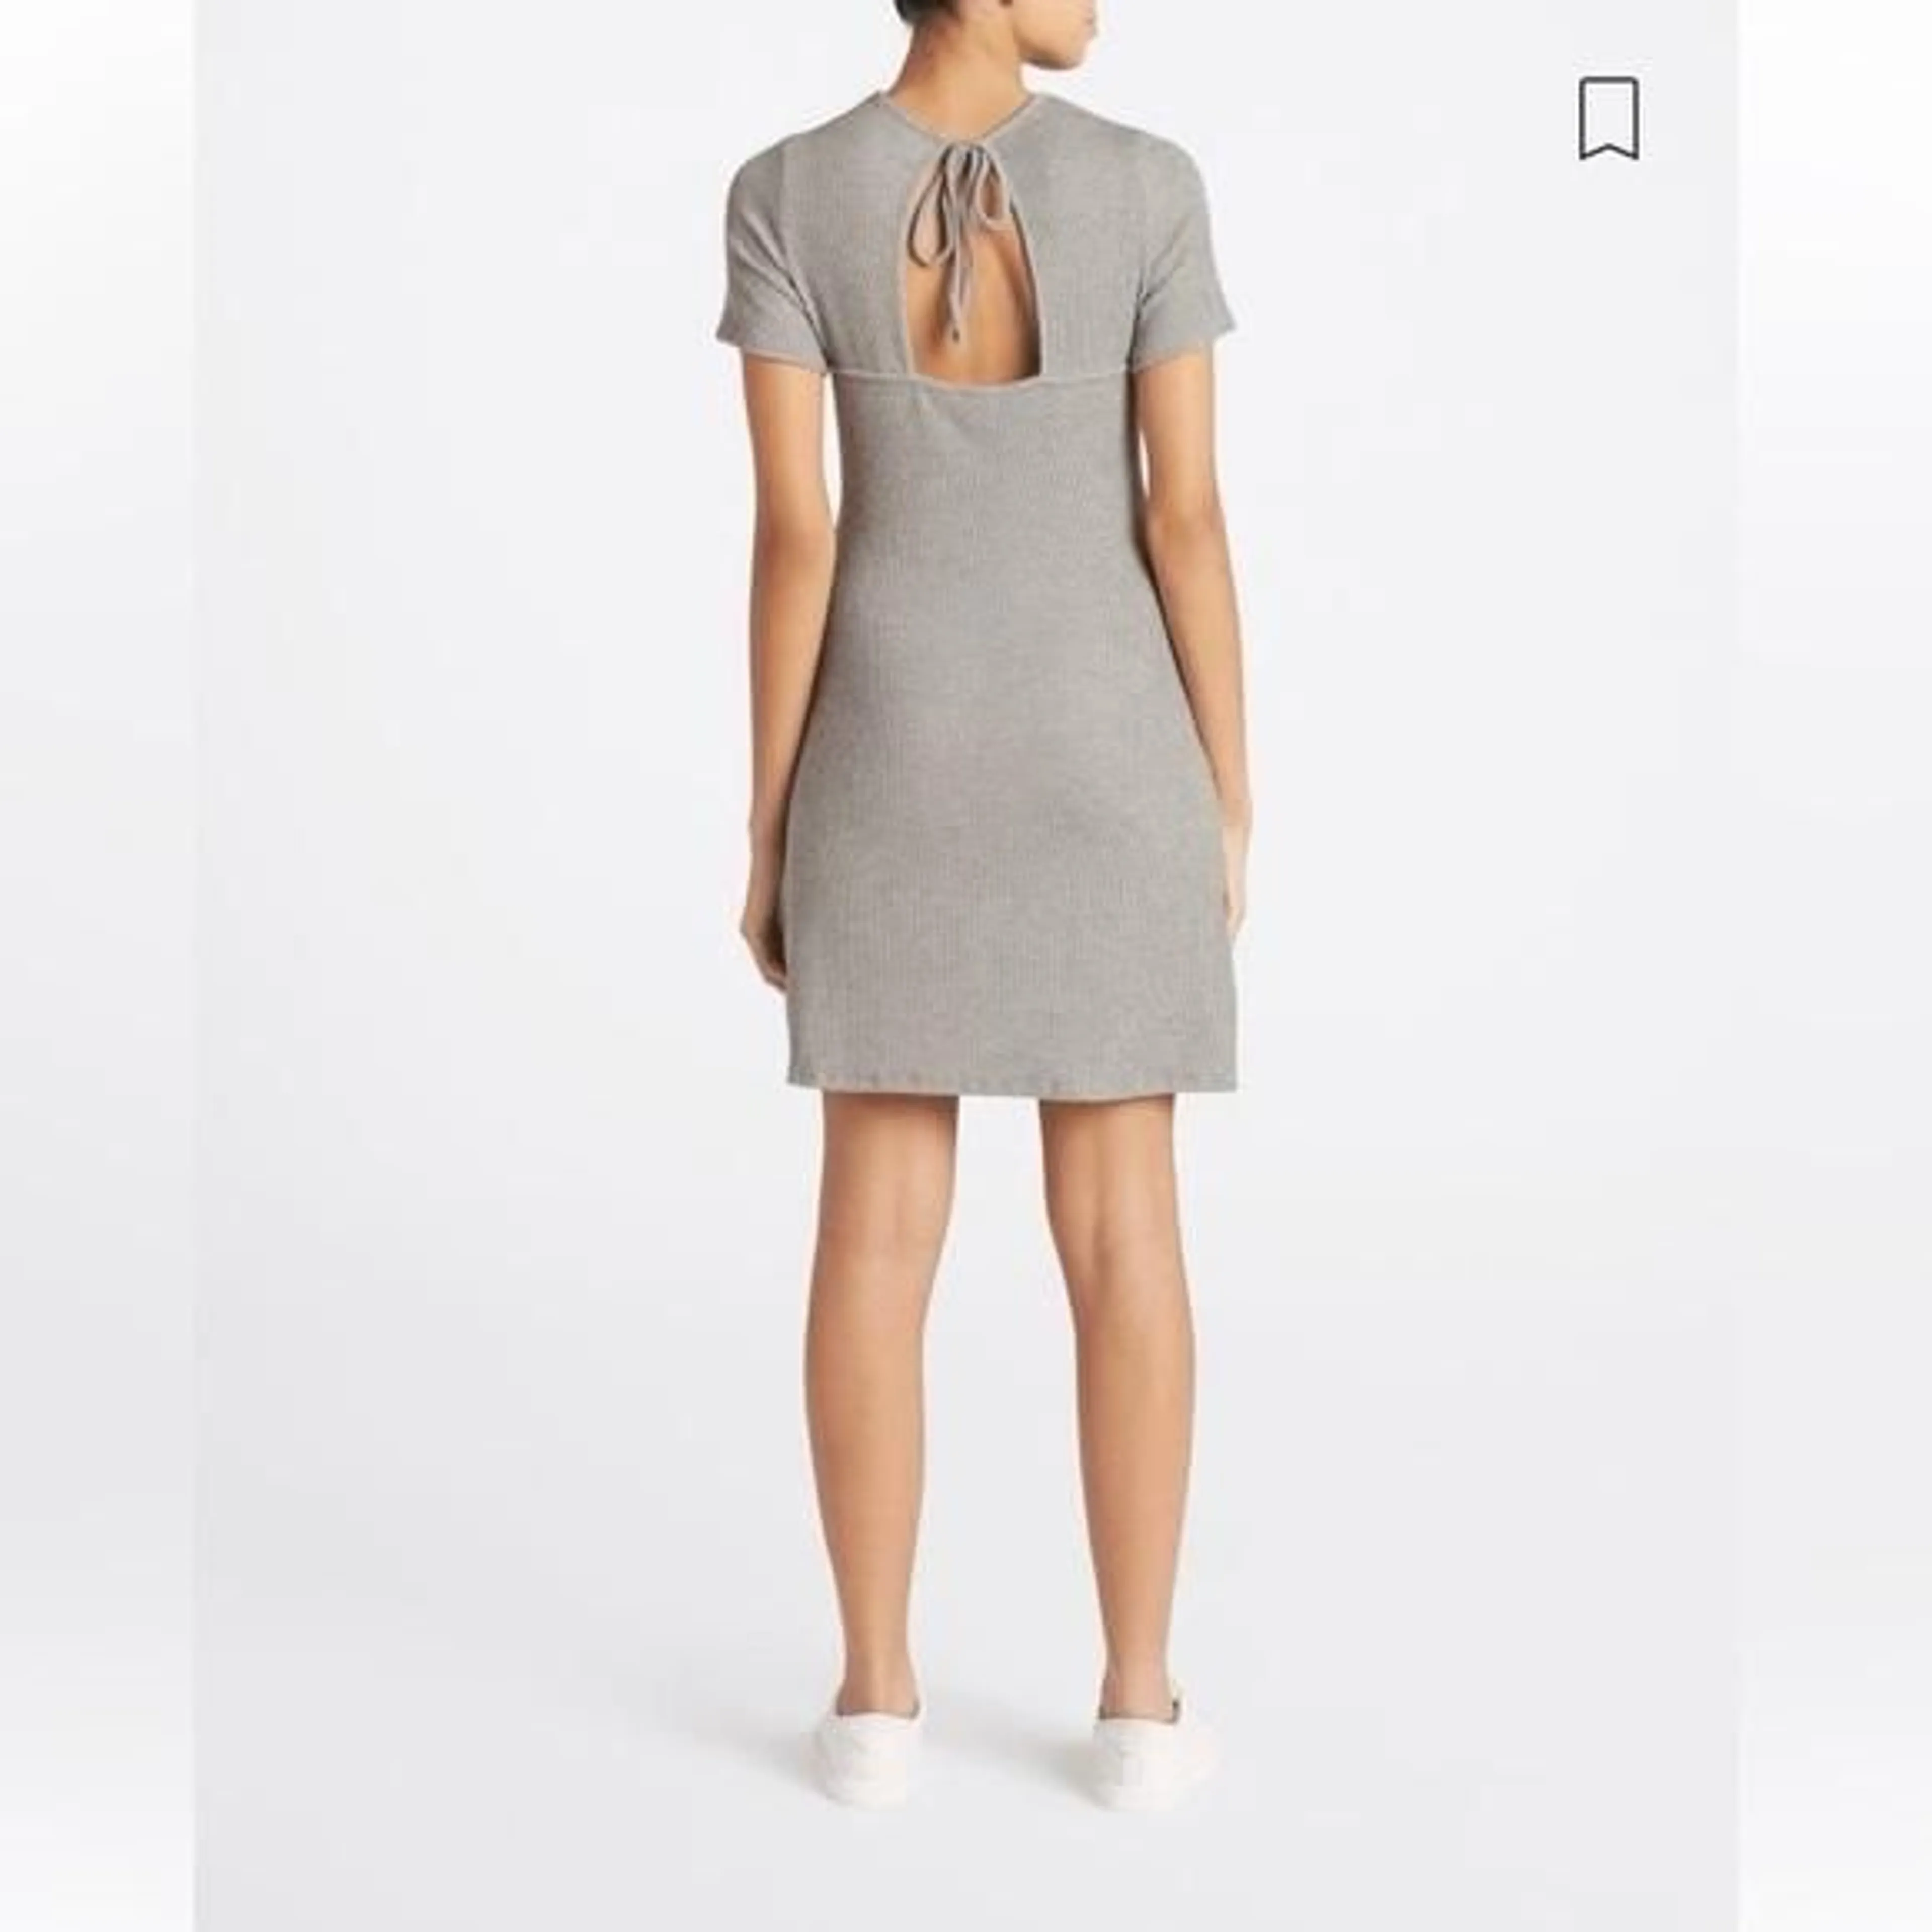 Size 1x Heatherly Byanka Grey open back dress NWT Large Stitch Fix